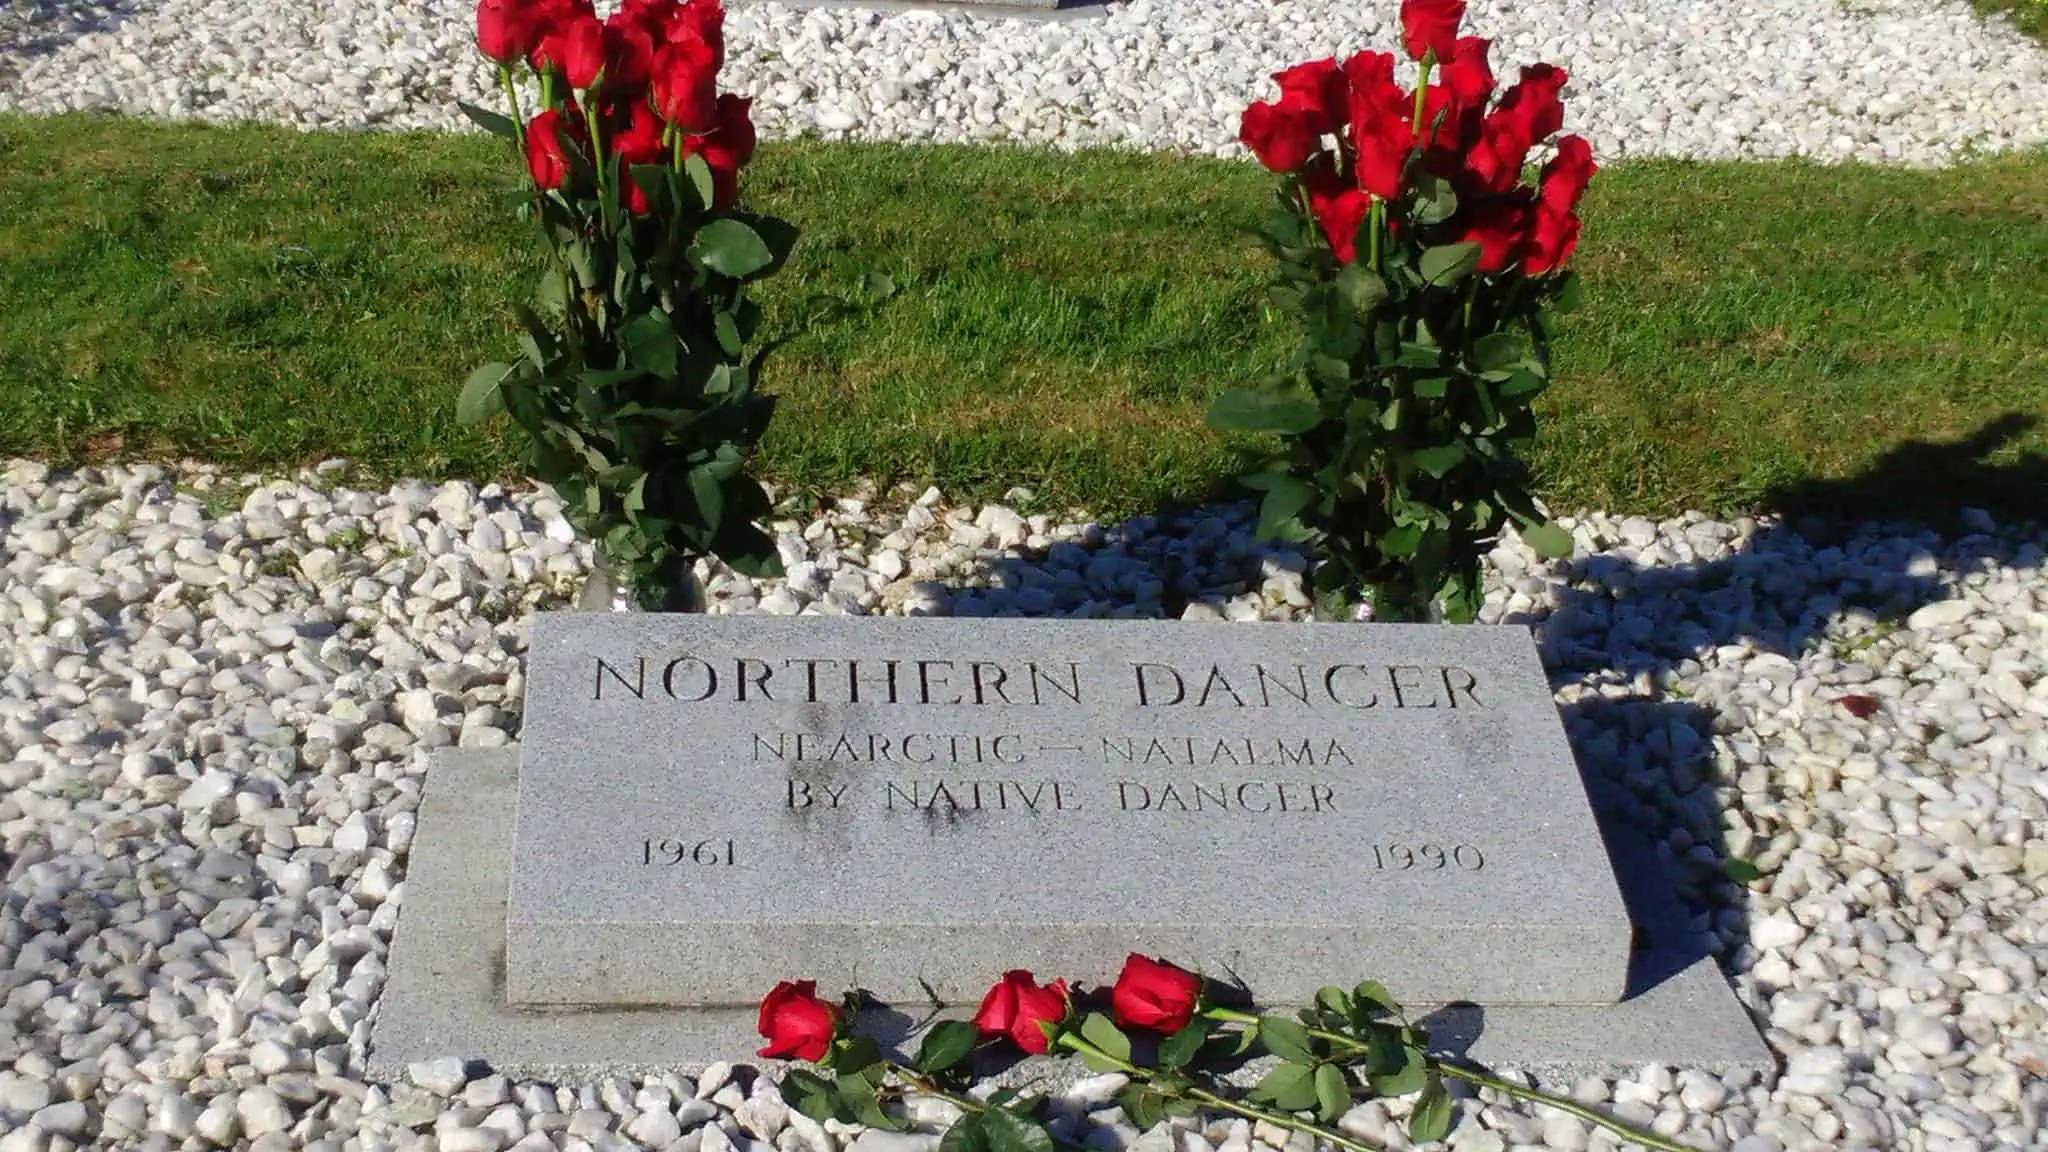 Northern Dancer's grave